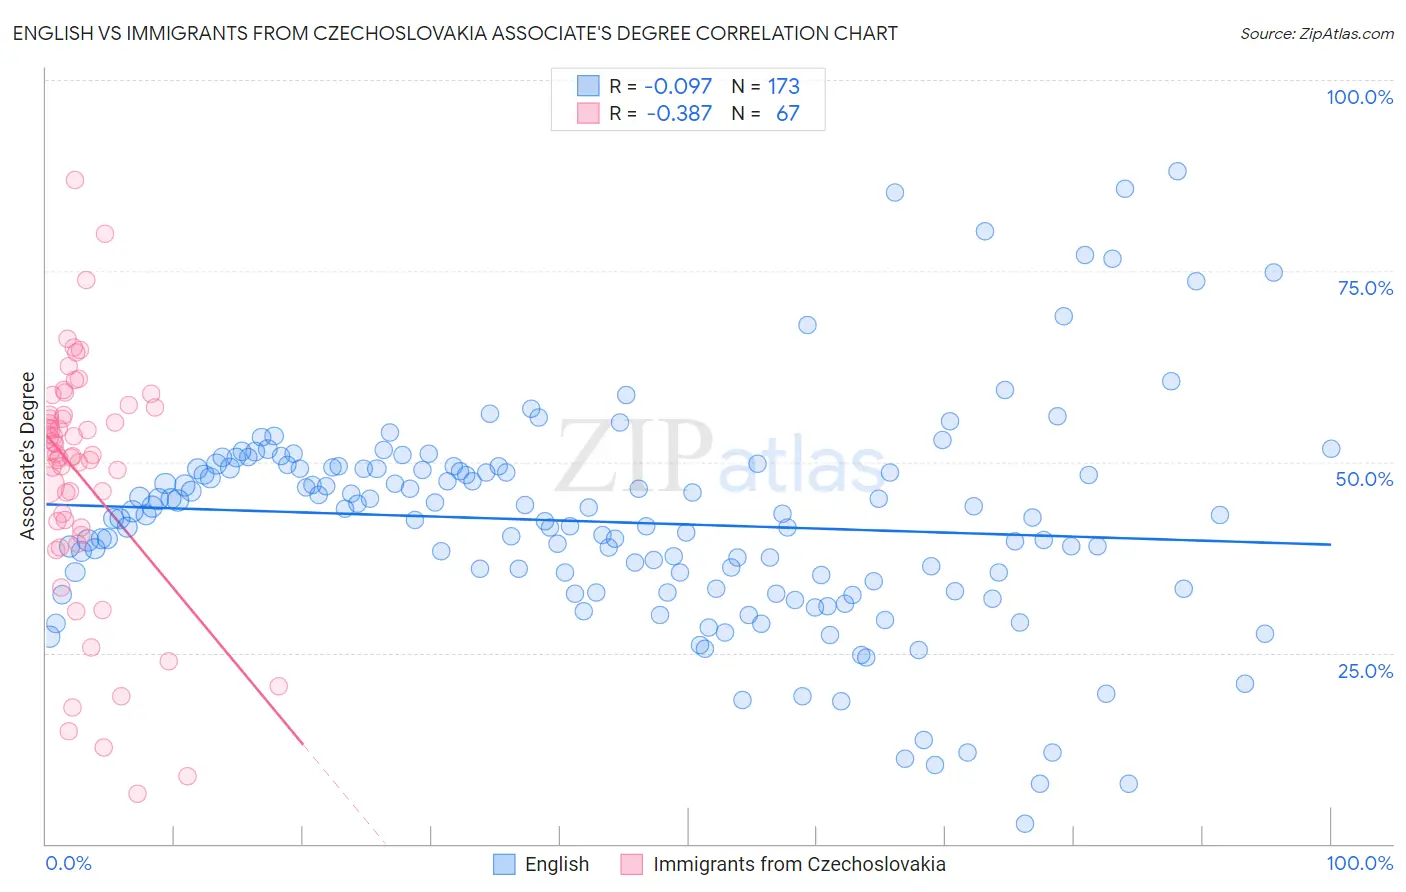 English vs Immigrants from Czechoslovakia Associate's Degree